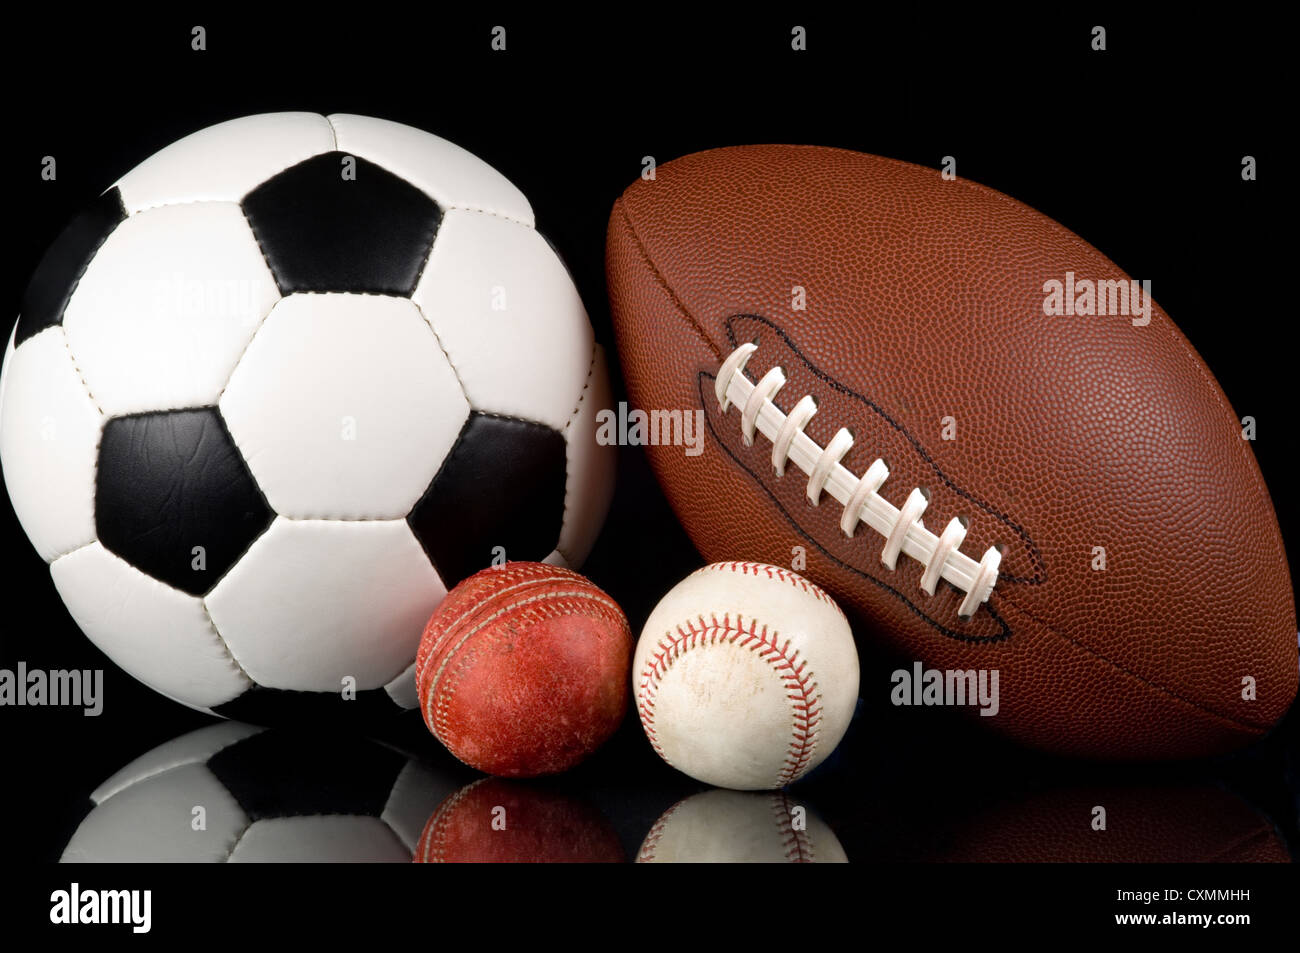 Un assortiment de ballons de sport y compris un ballon de soccer, football américain, baseball et cricket ball en arrière-plan Banque D'Images